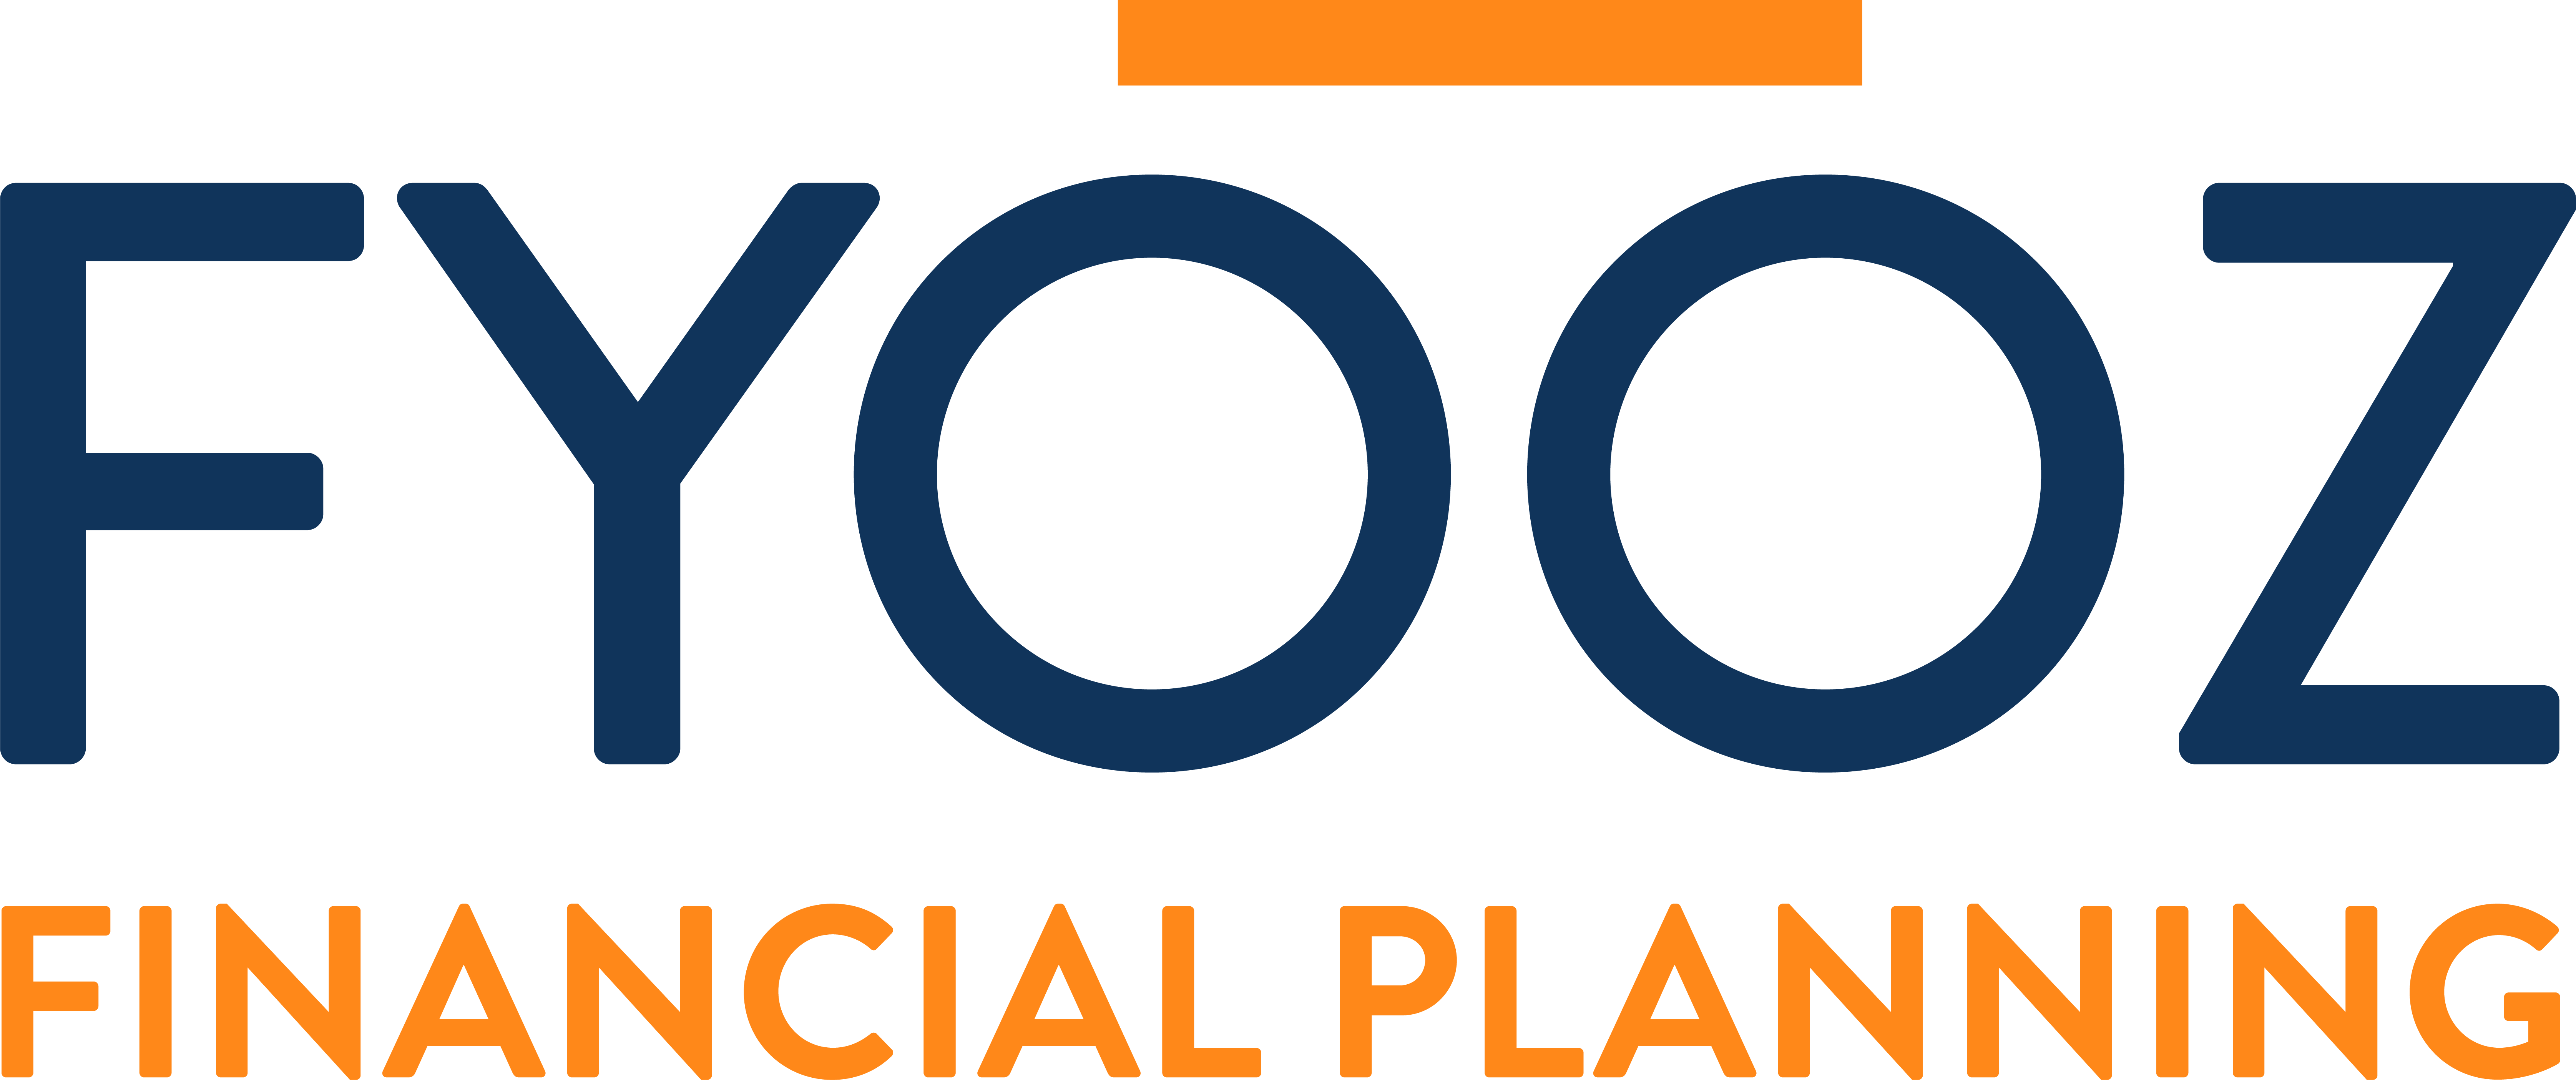 Fyooz Financial Planning